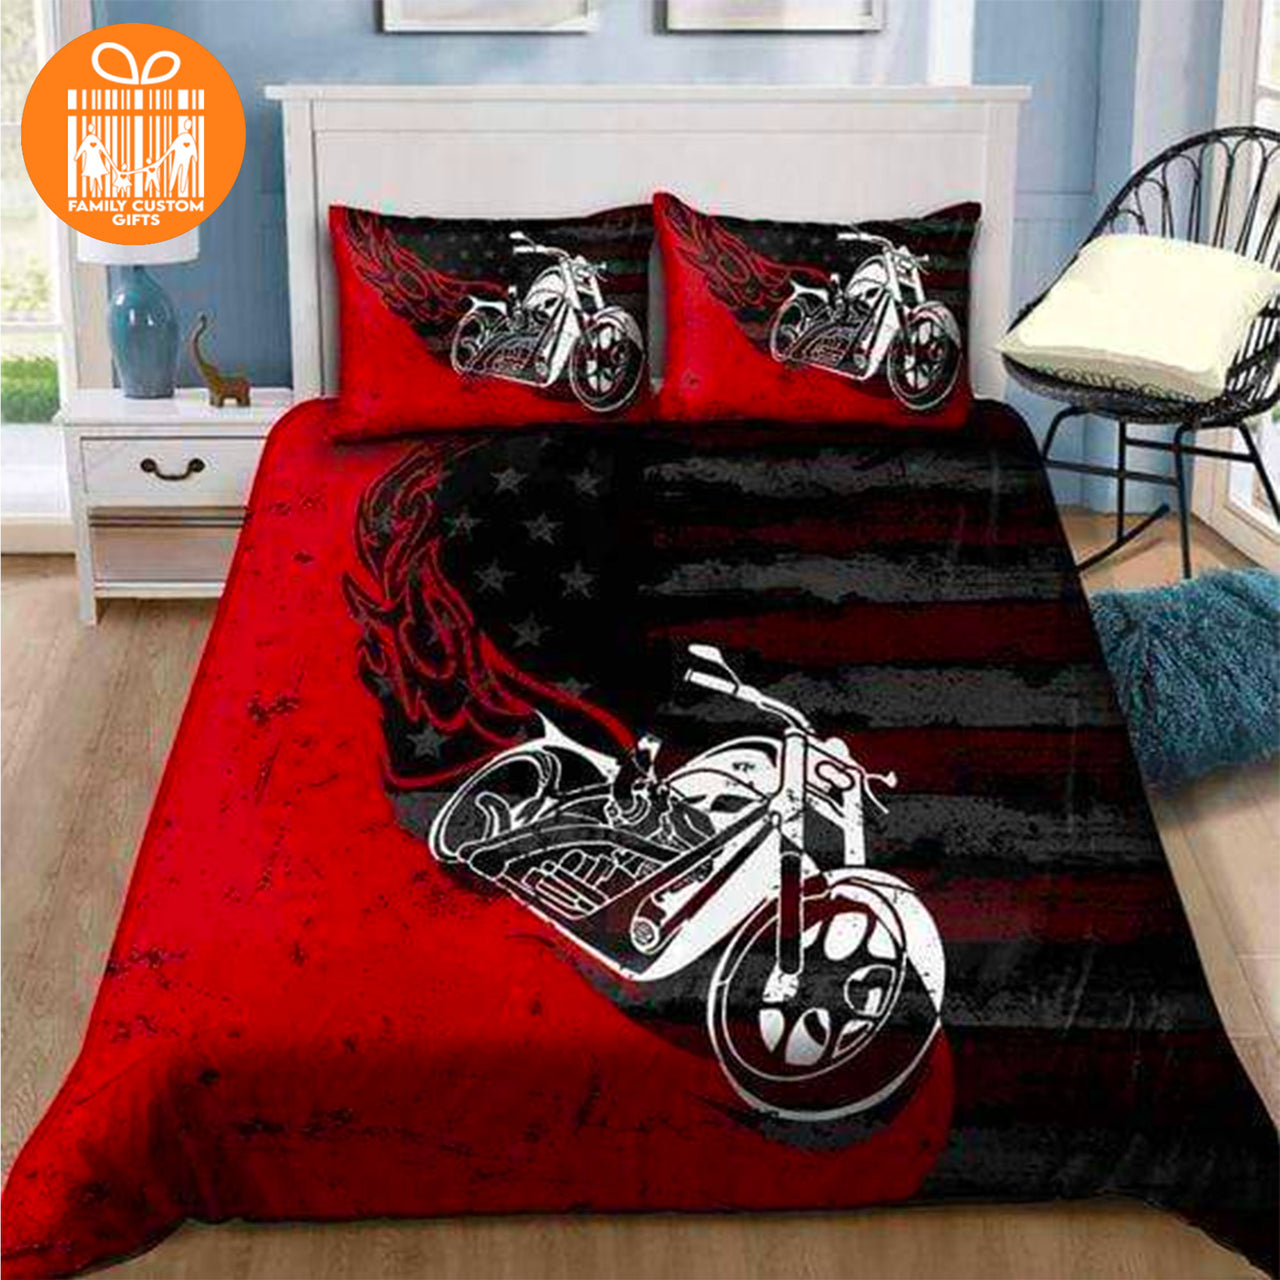 Comforter Vintage Motorcycle American Flag Custom Bedding Set for Kids Teens Adult Personalized Premium Bed Set